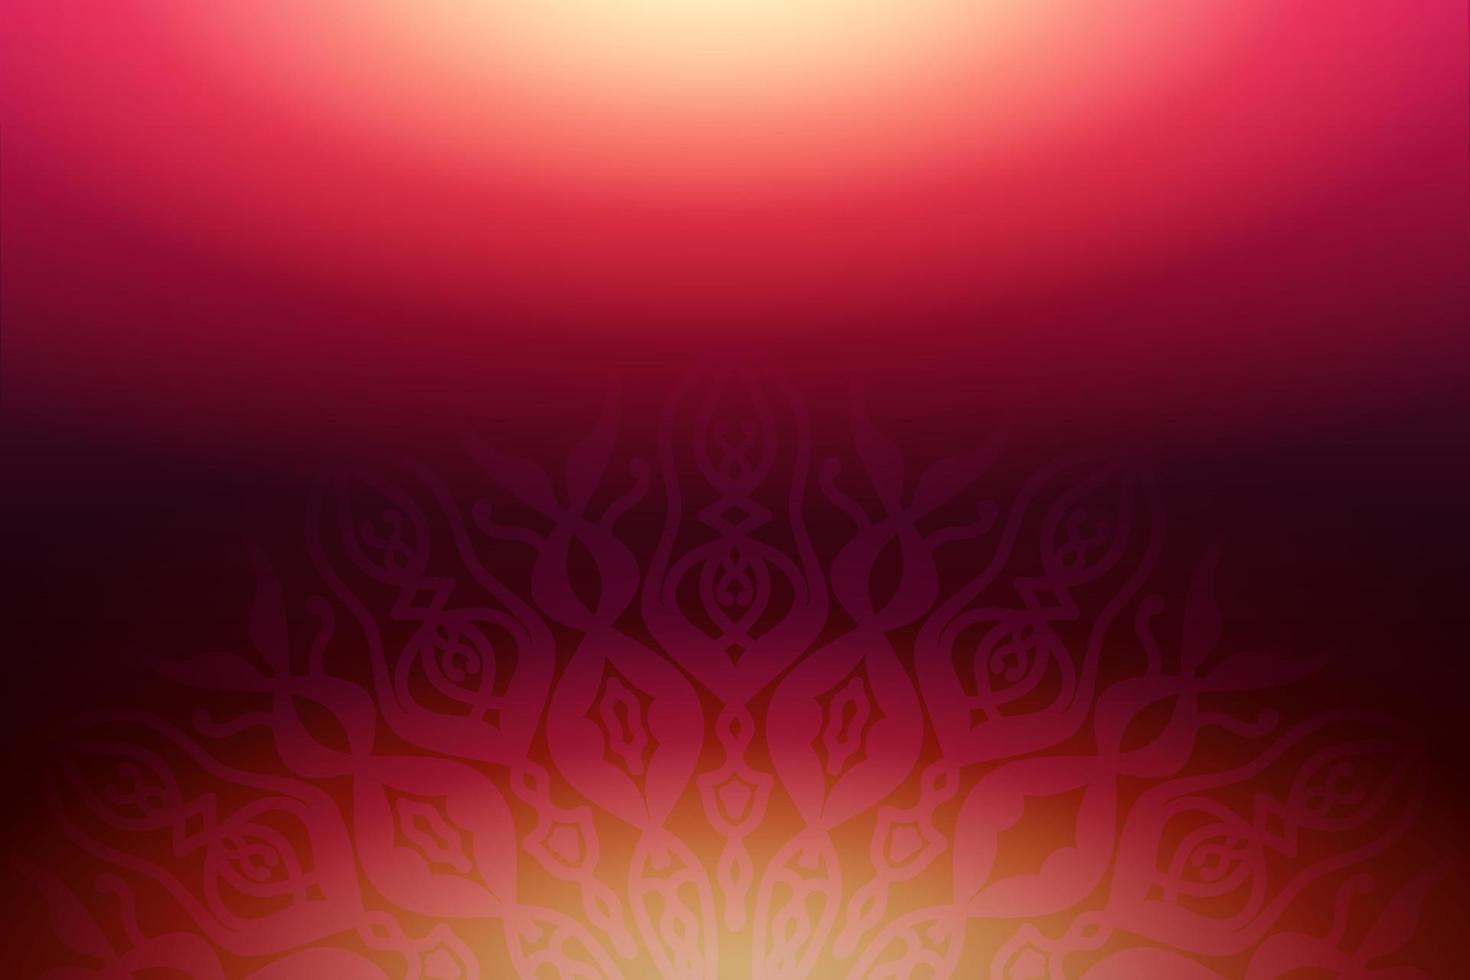 Mandala-Hintergrundillustration, Farbverlauf, ideal für Webdesign-Materialien, Präsentationen, Banner, Poster, Visitenkarten, Einladungen vektor